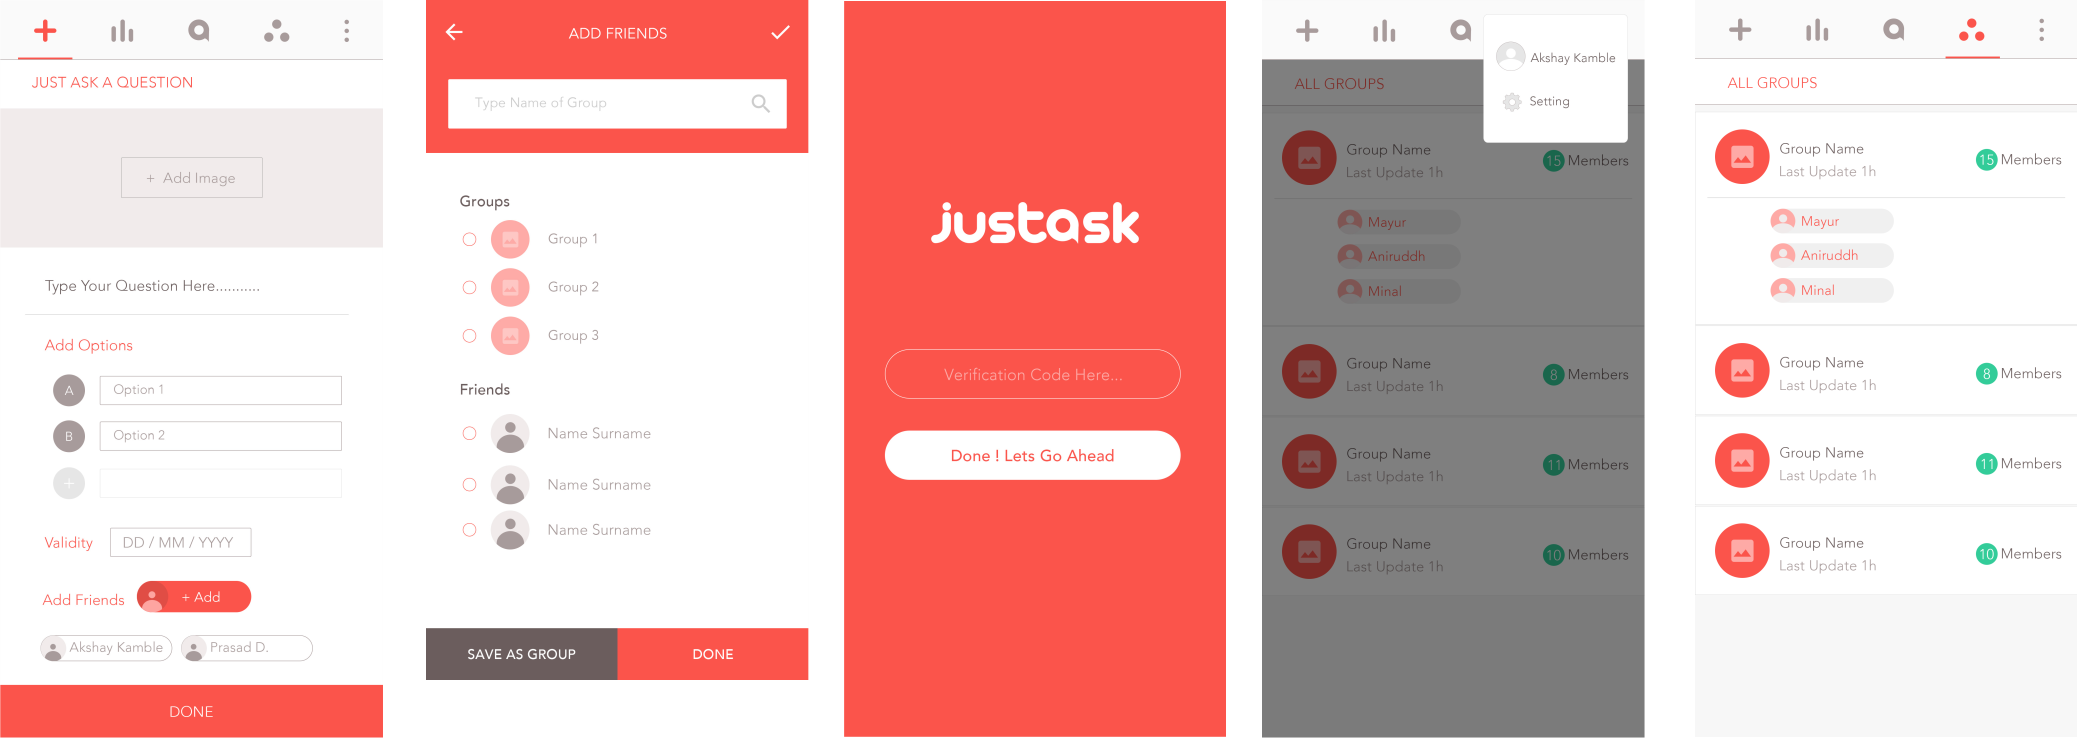 Justask mobile app page design